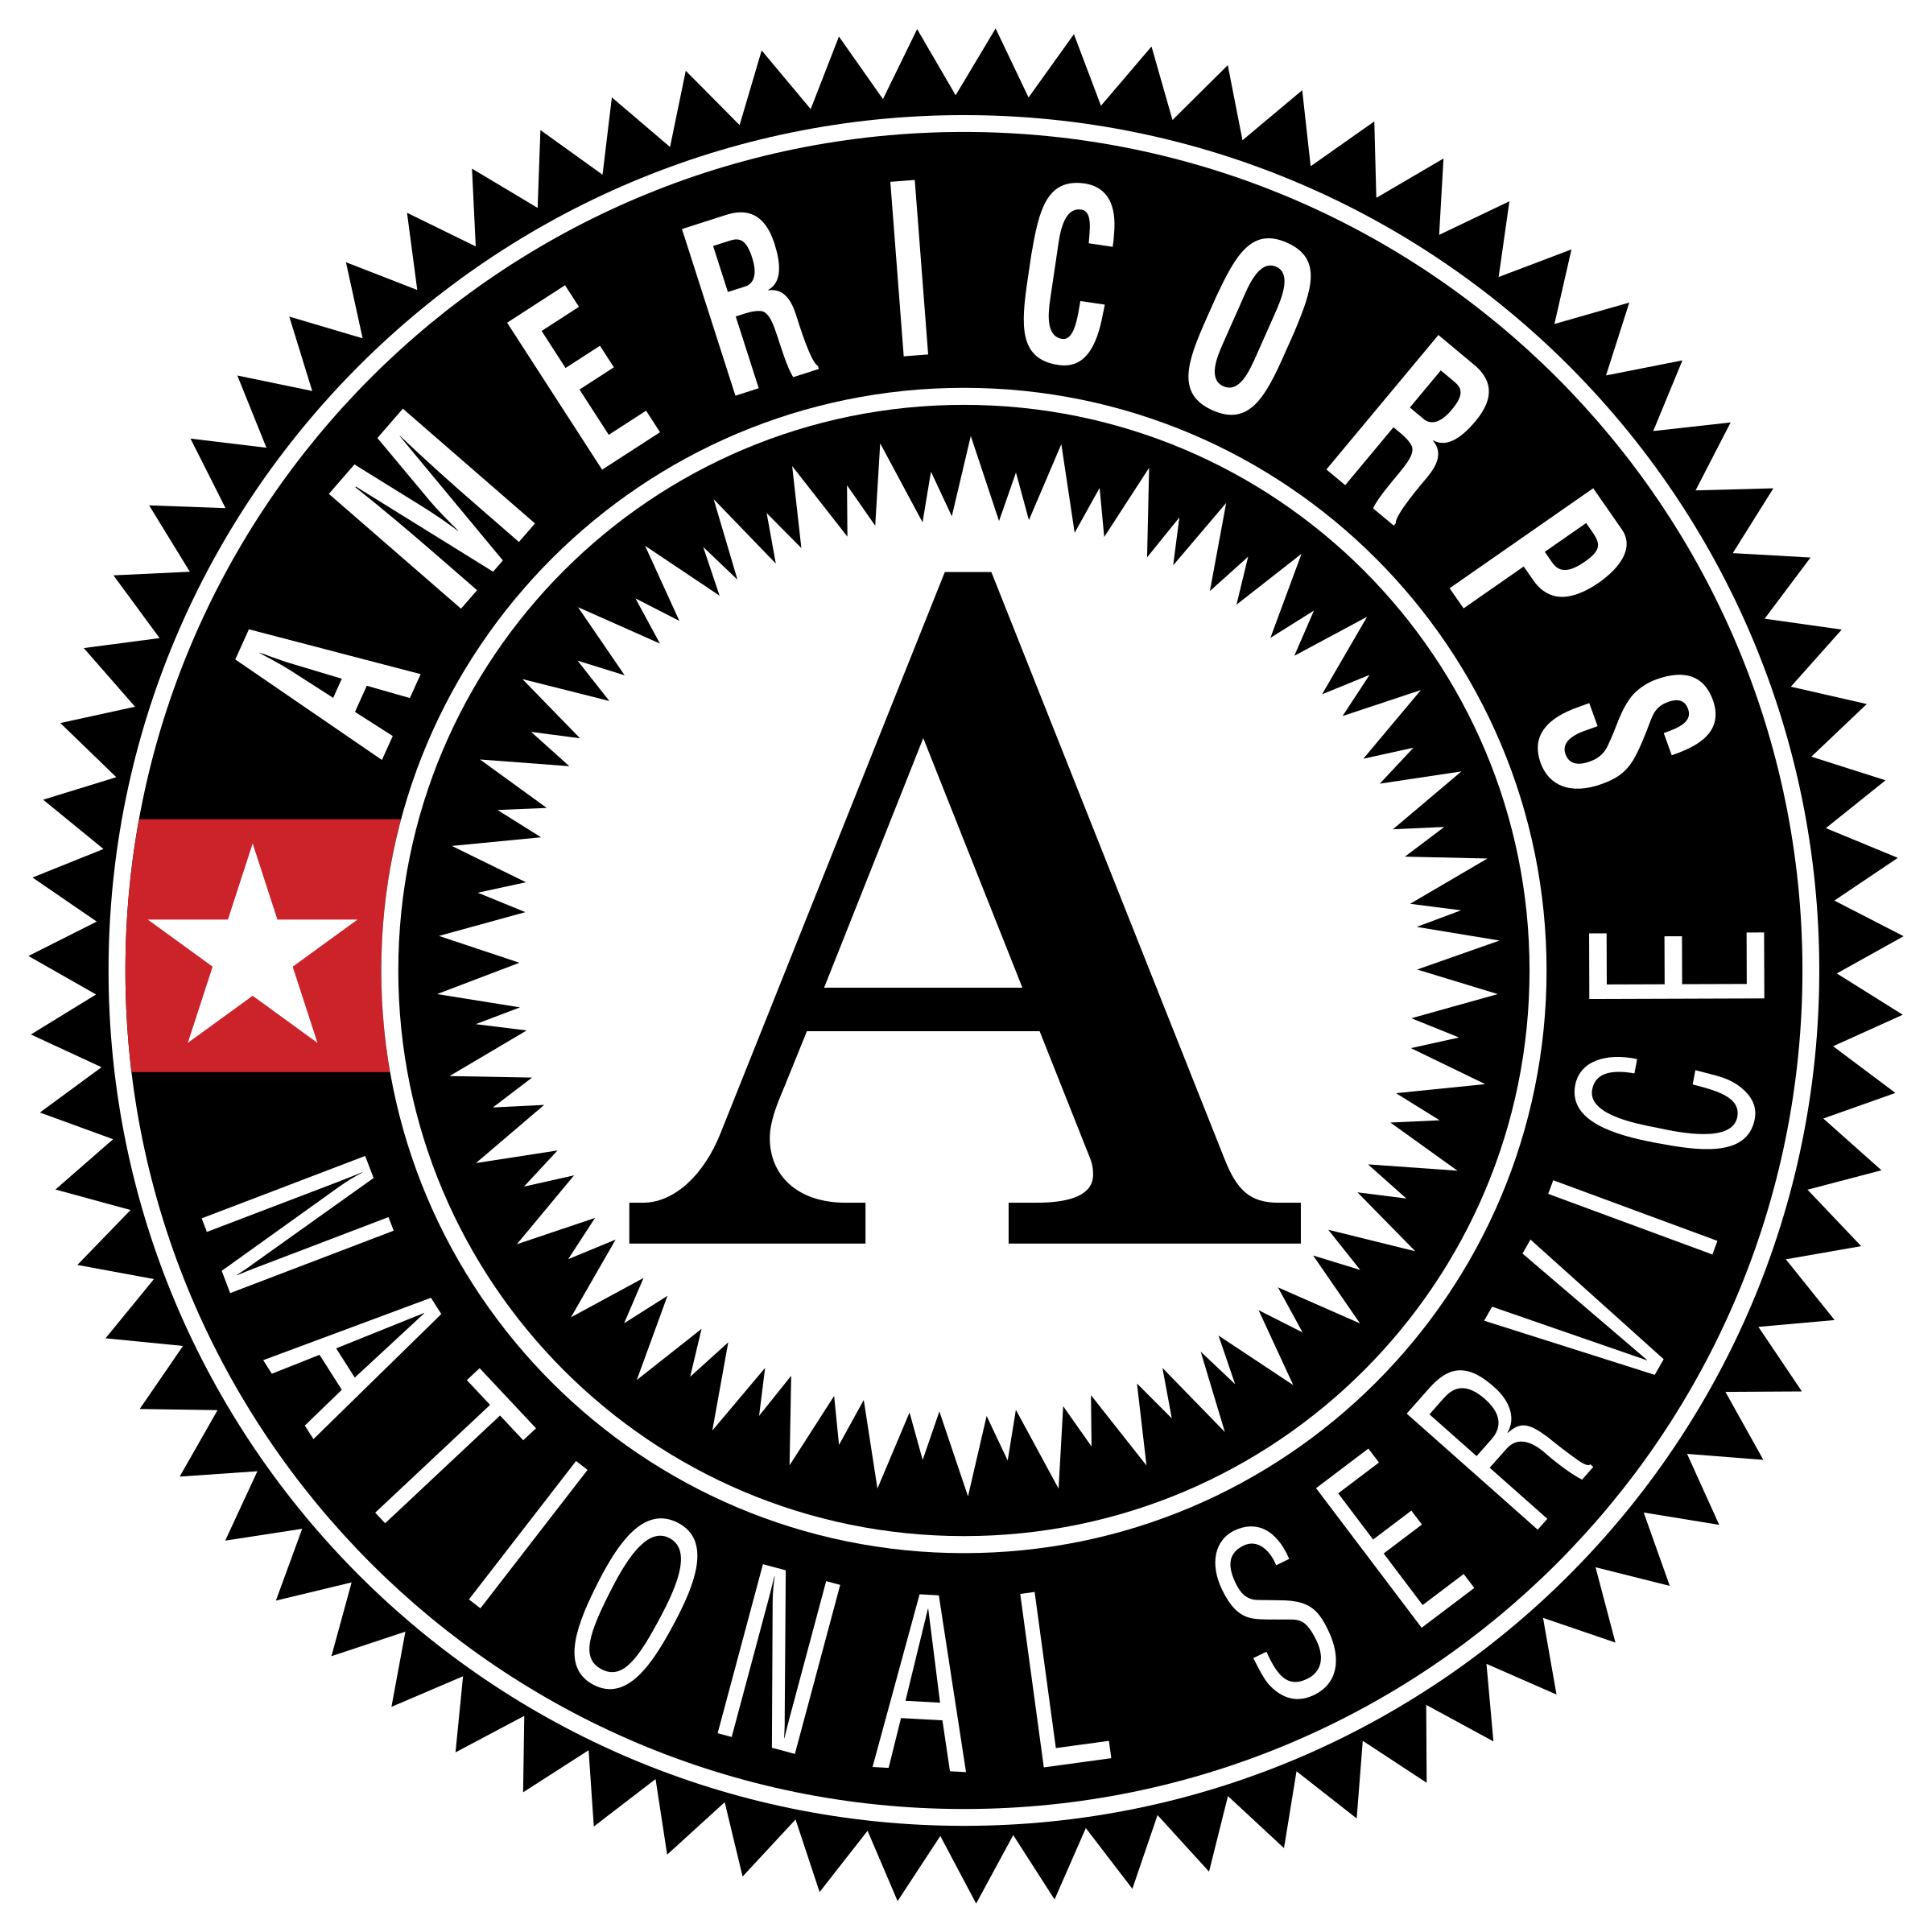 AmeriCorps Logo - AmeriCorps National Service Logo PNG Transparent & SVG Vector ...